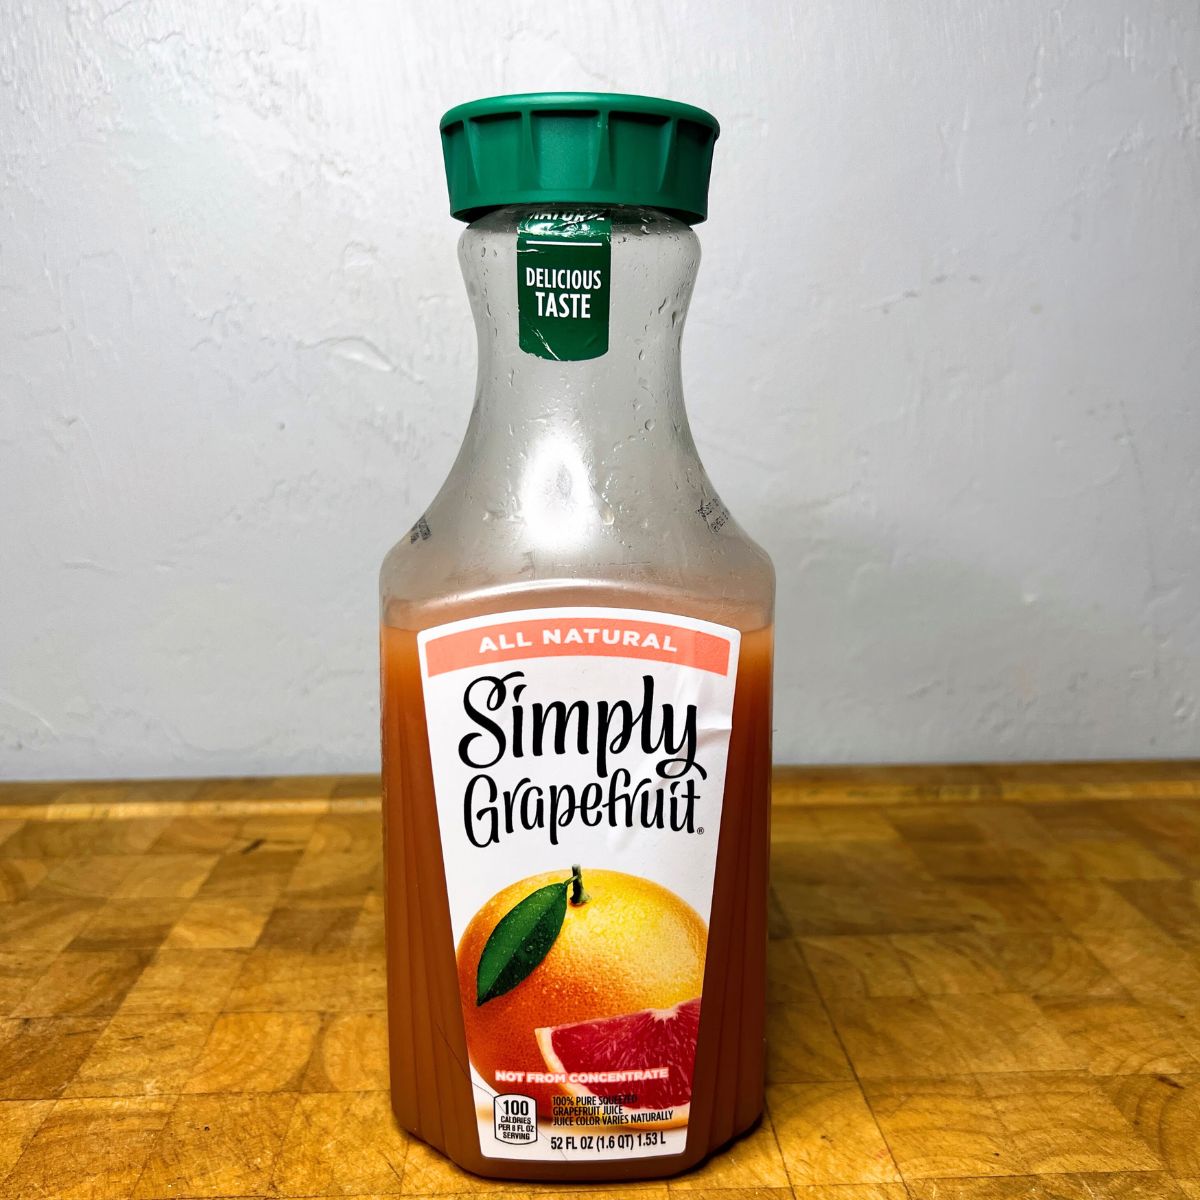 Bottle of grapefruit juice on a table.